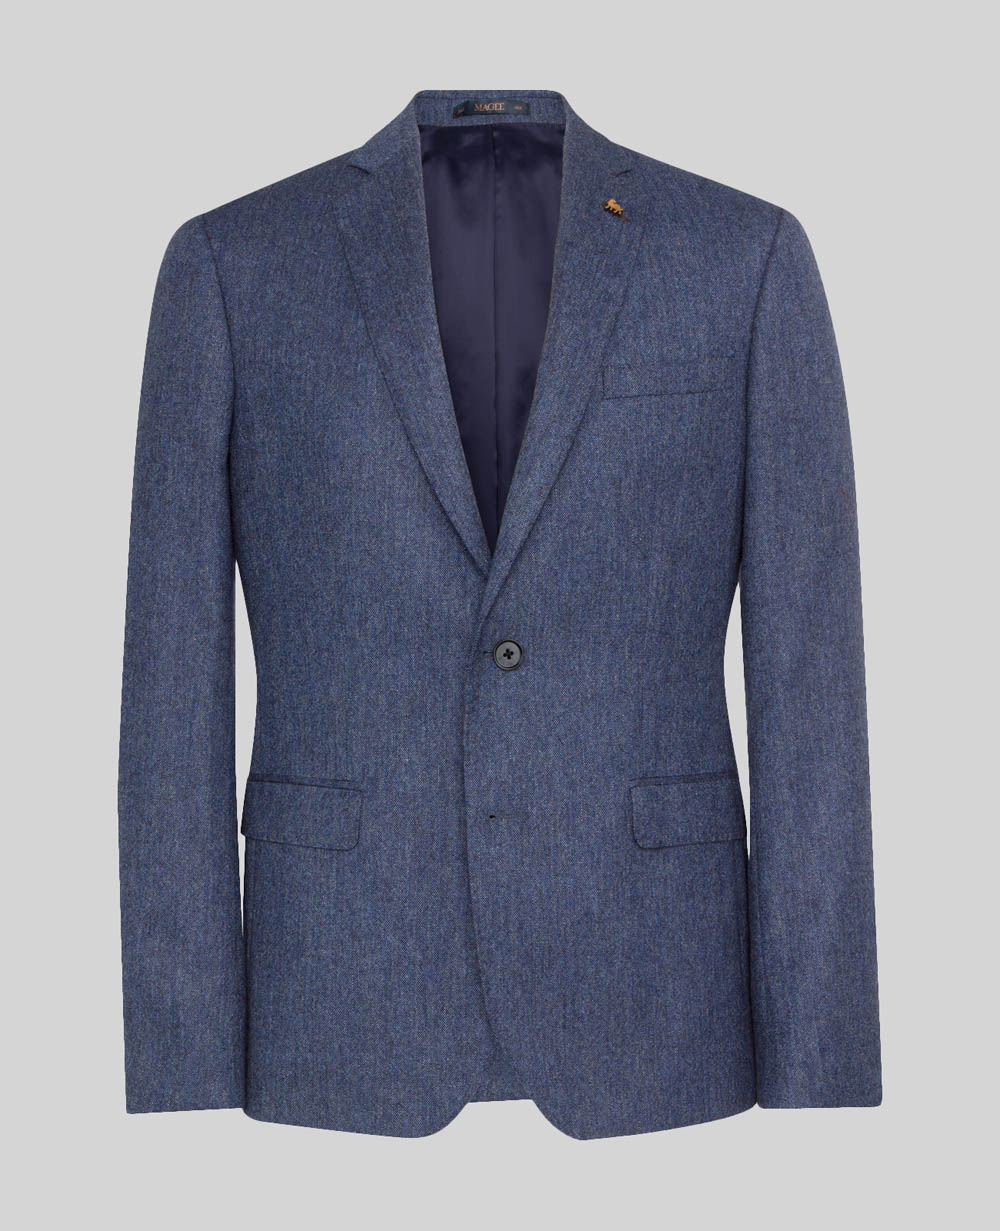 Jackets / Blazers - Tom Murphy's Formal and Menswear